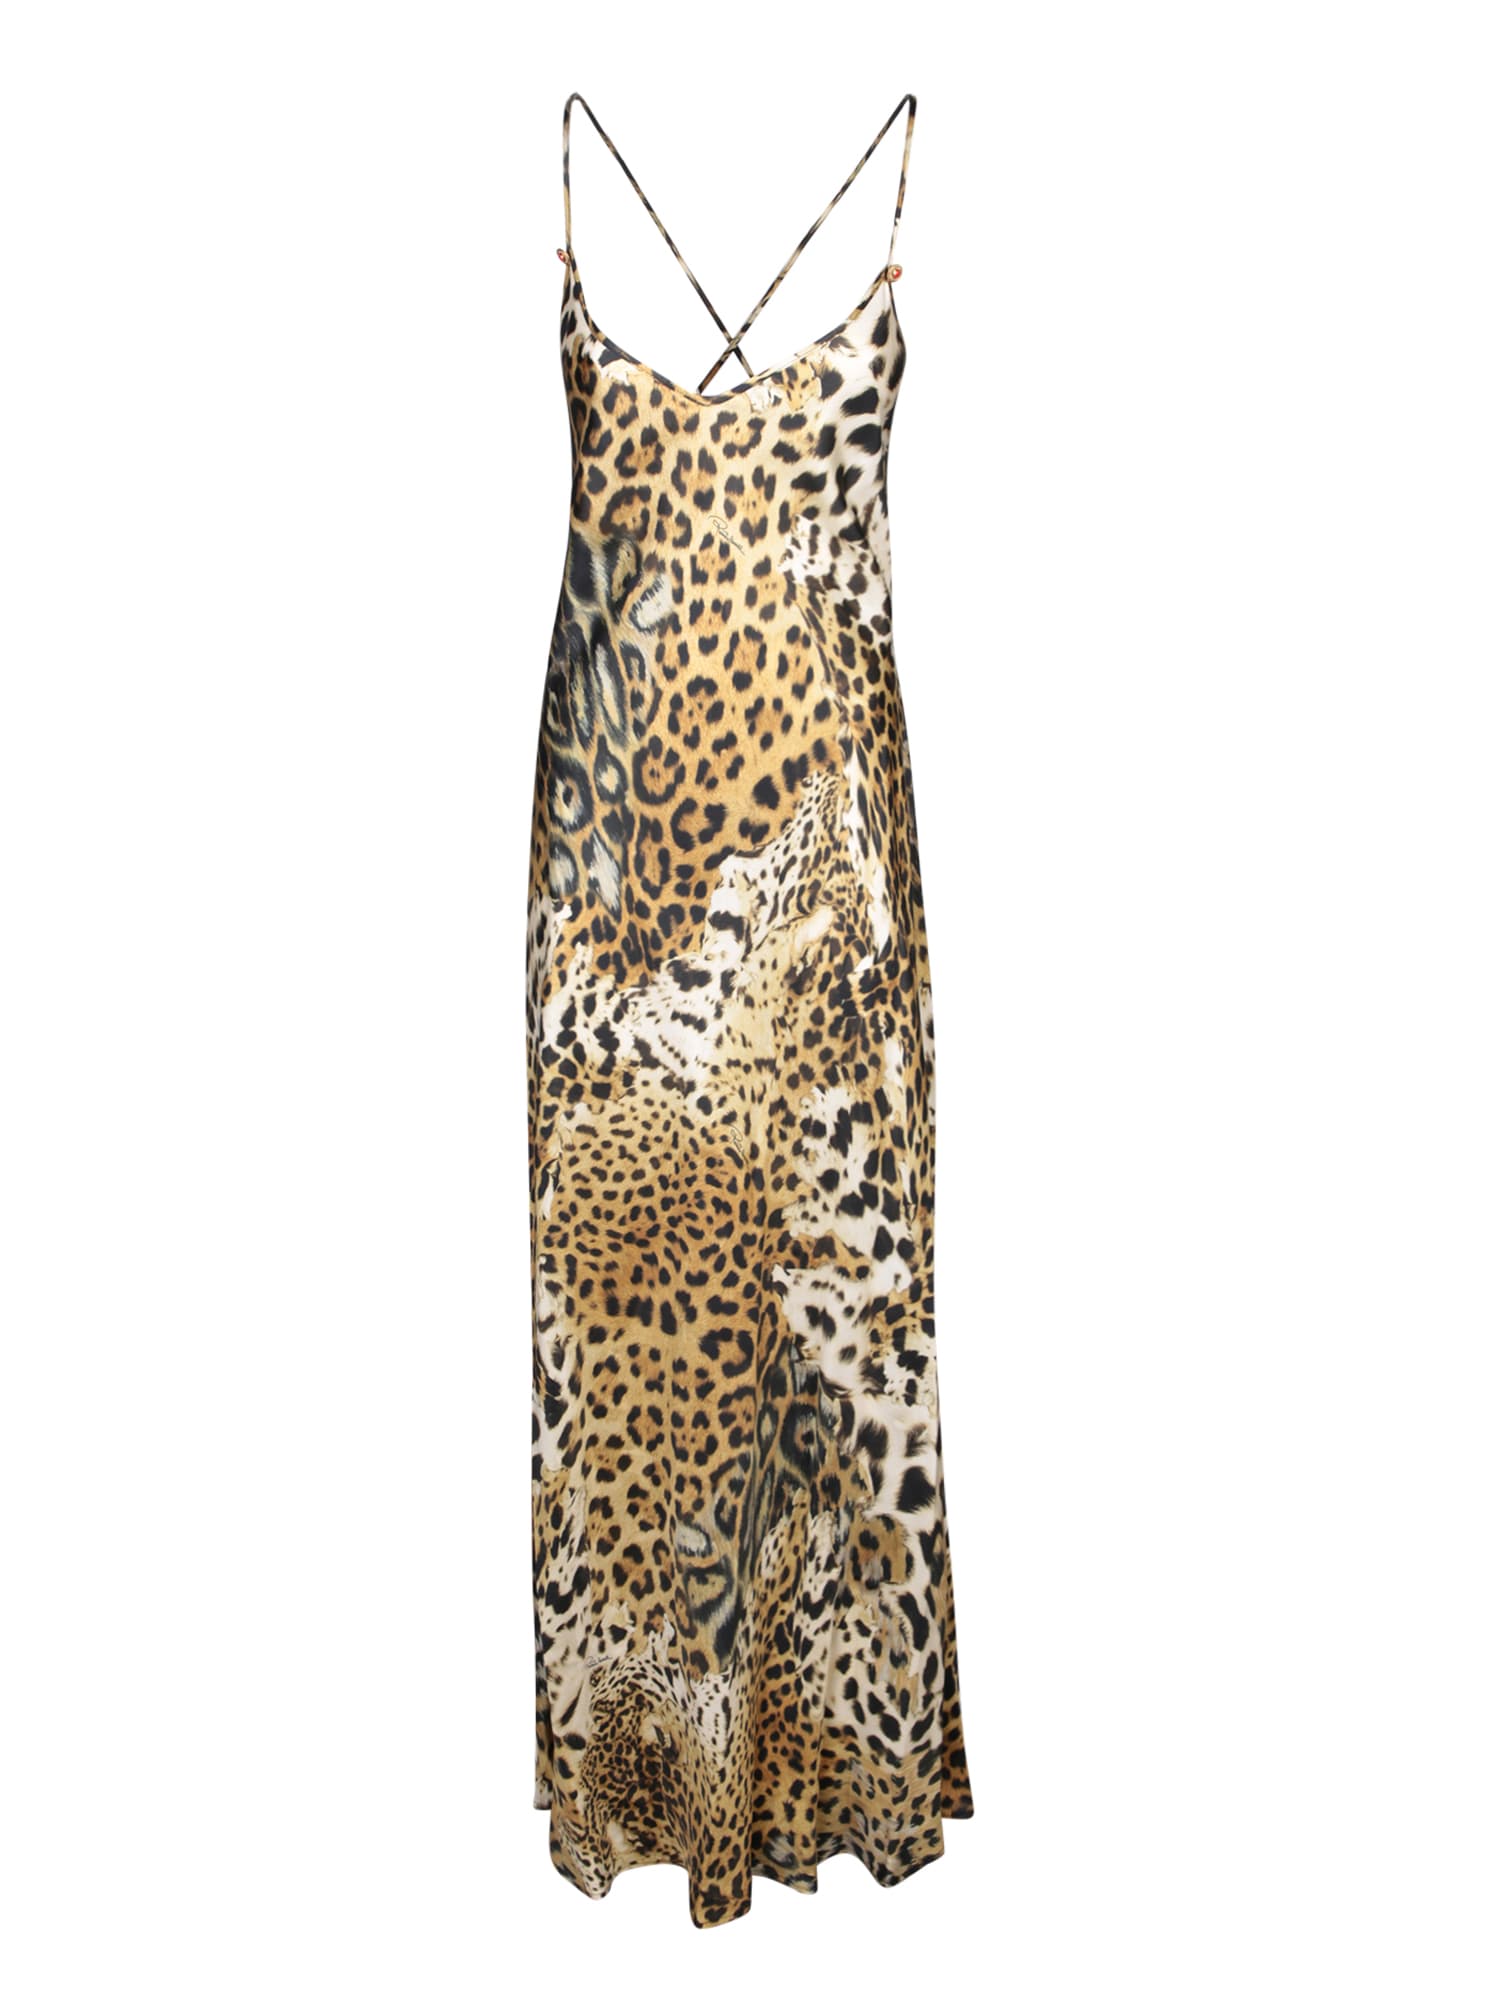 Jaguar Skin Print Dress